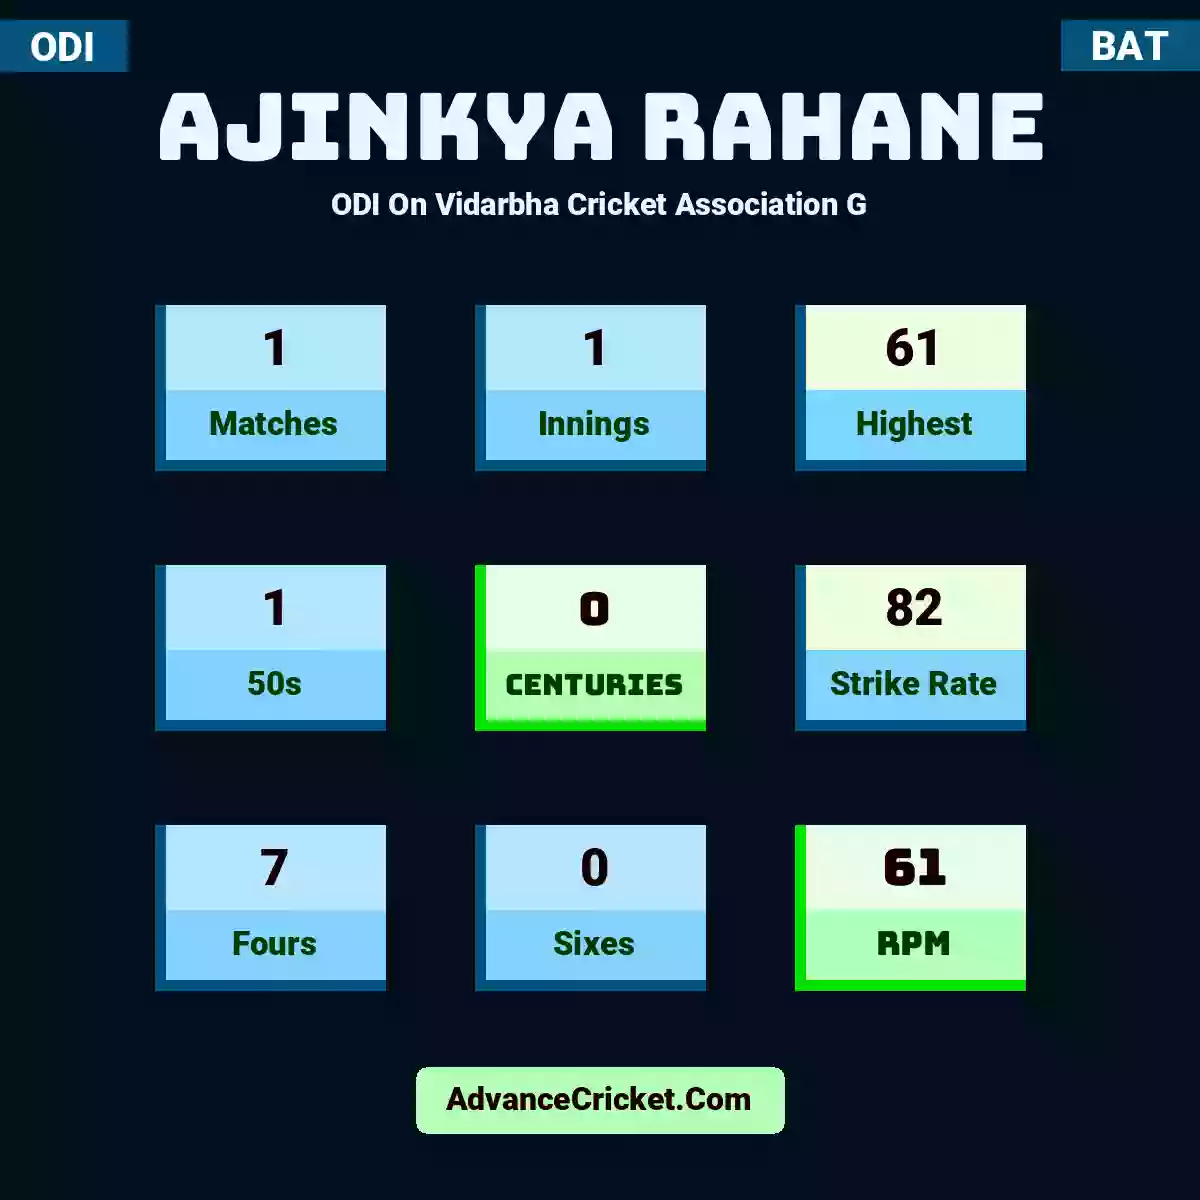 Ajinkya Rahane ODI  On Vidarbha Cricket Association G, Ajinkya Rahane played 1 matches, scored 61 runs as highest, 1 half-centuries, and 0 centuries, with a strike rate of 82. A.Rahane hit 7 fours and 0 sixes, with an RPM of 61.